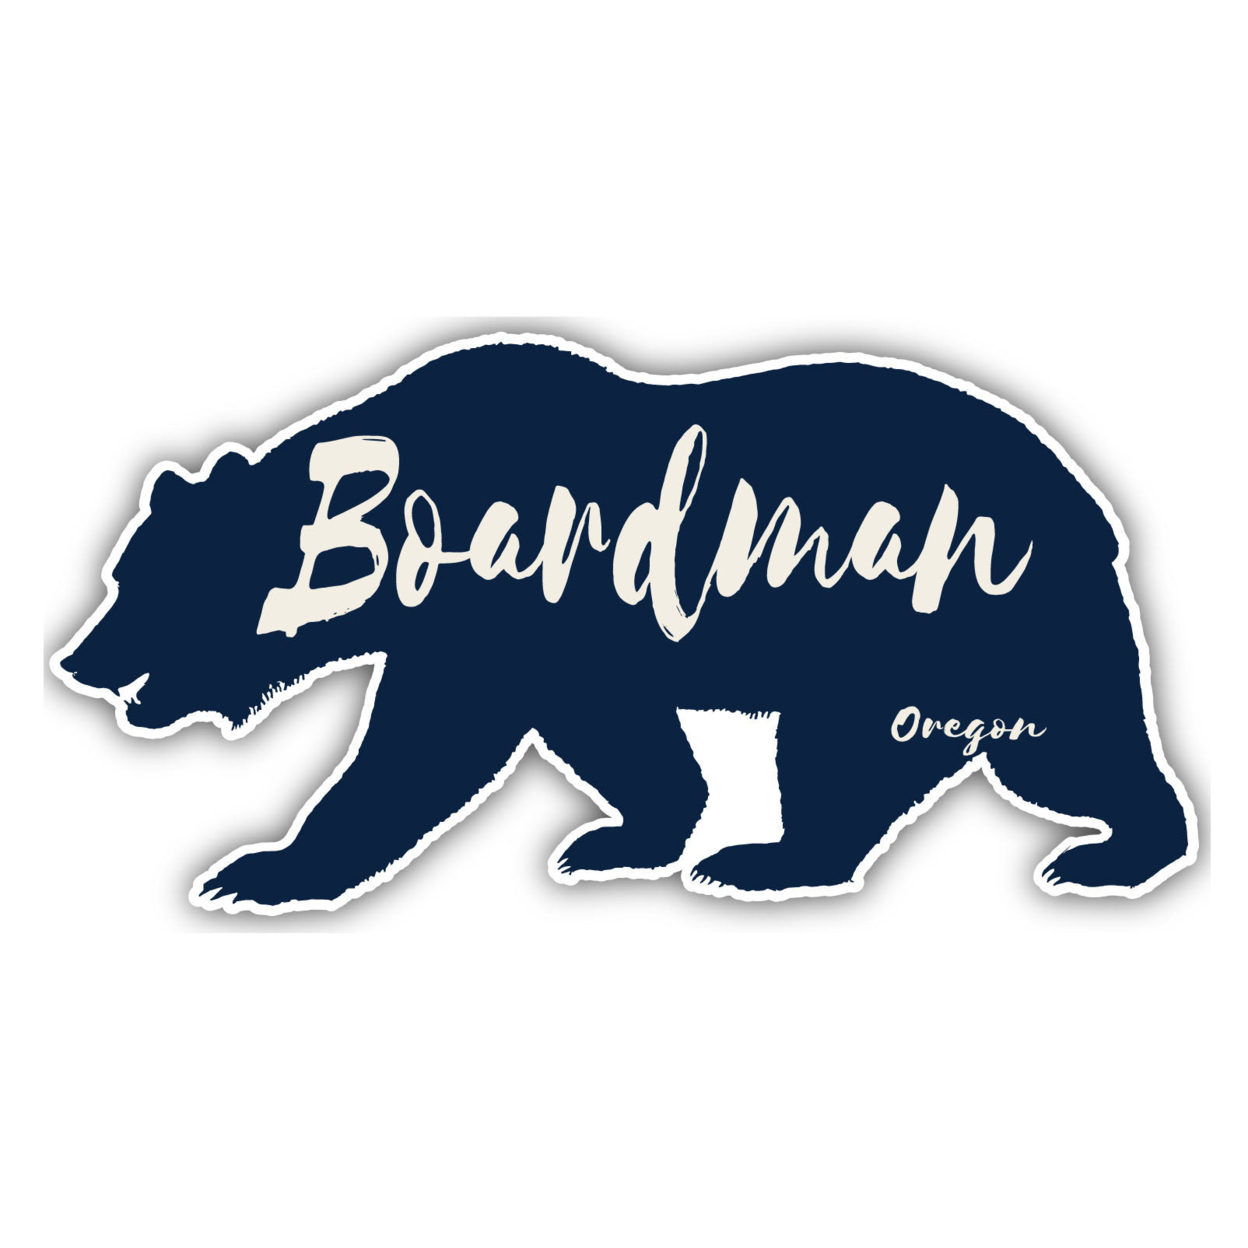 Boardman Oregon Souvenir Decorative Stickers (Choose Theme And Size) - 4-Pack, 4-Inch, Tent